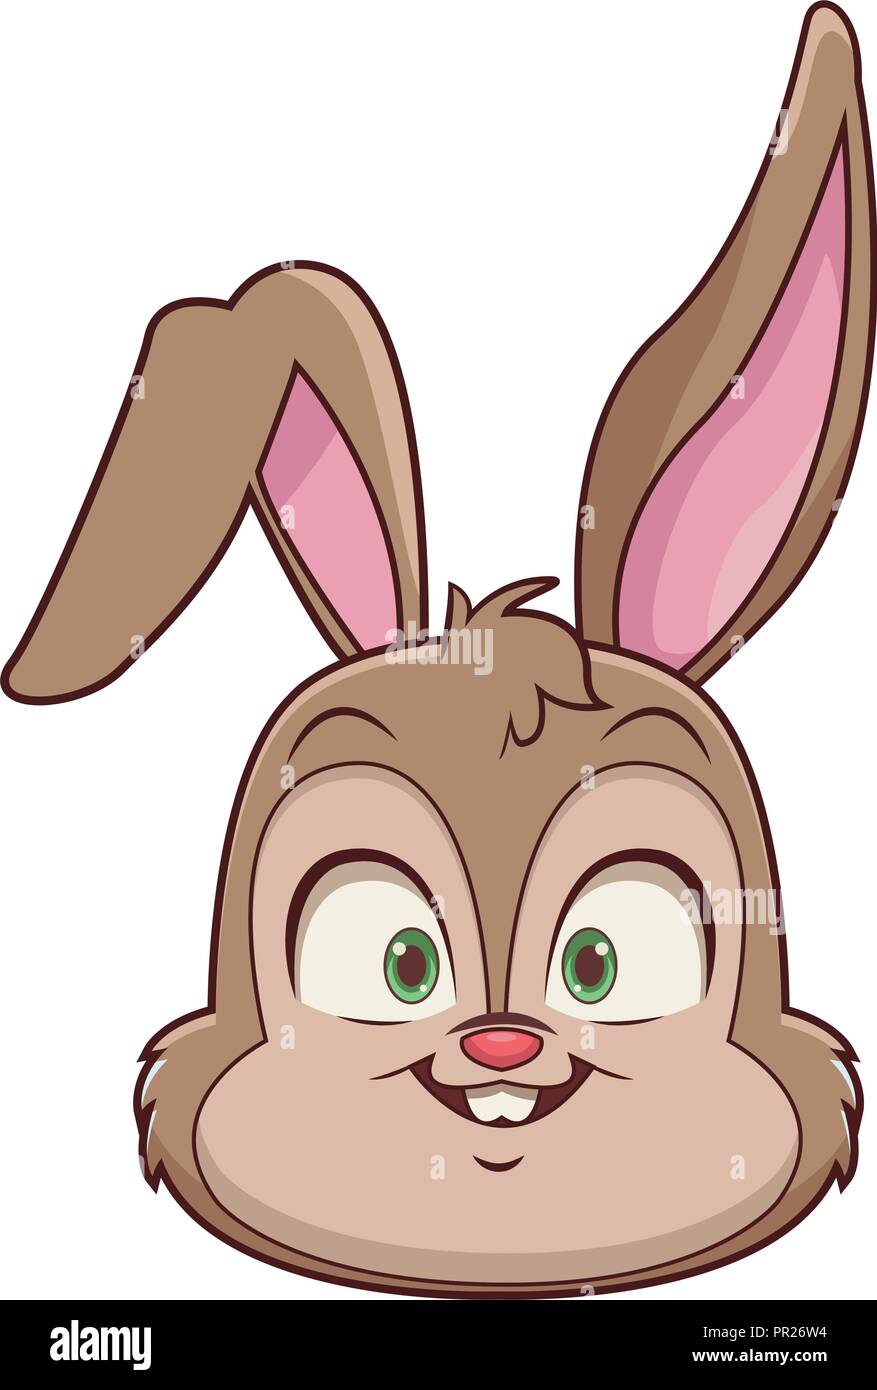 Face Cute Bunny Face Rabbit Cartoon : Cute Bunny Face Image Royalty